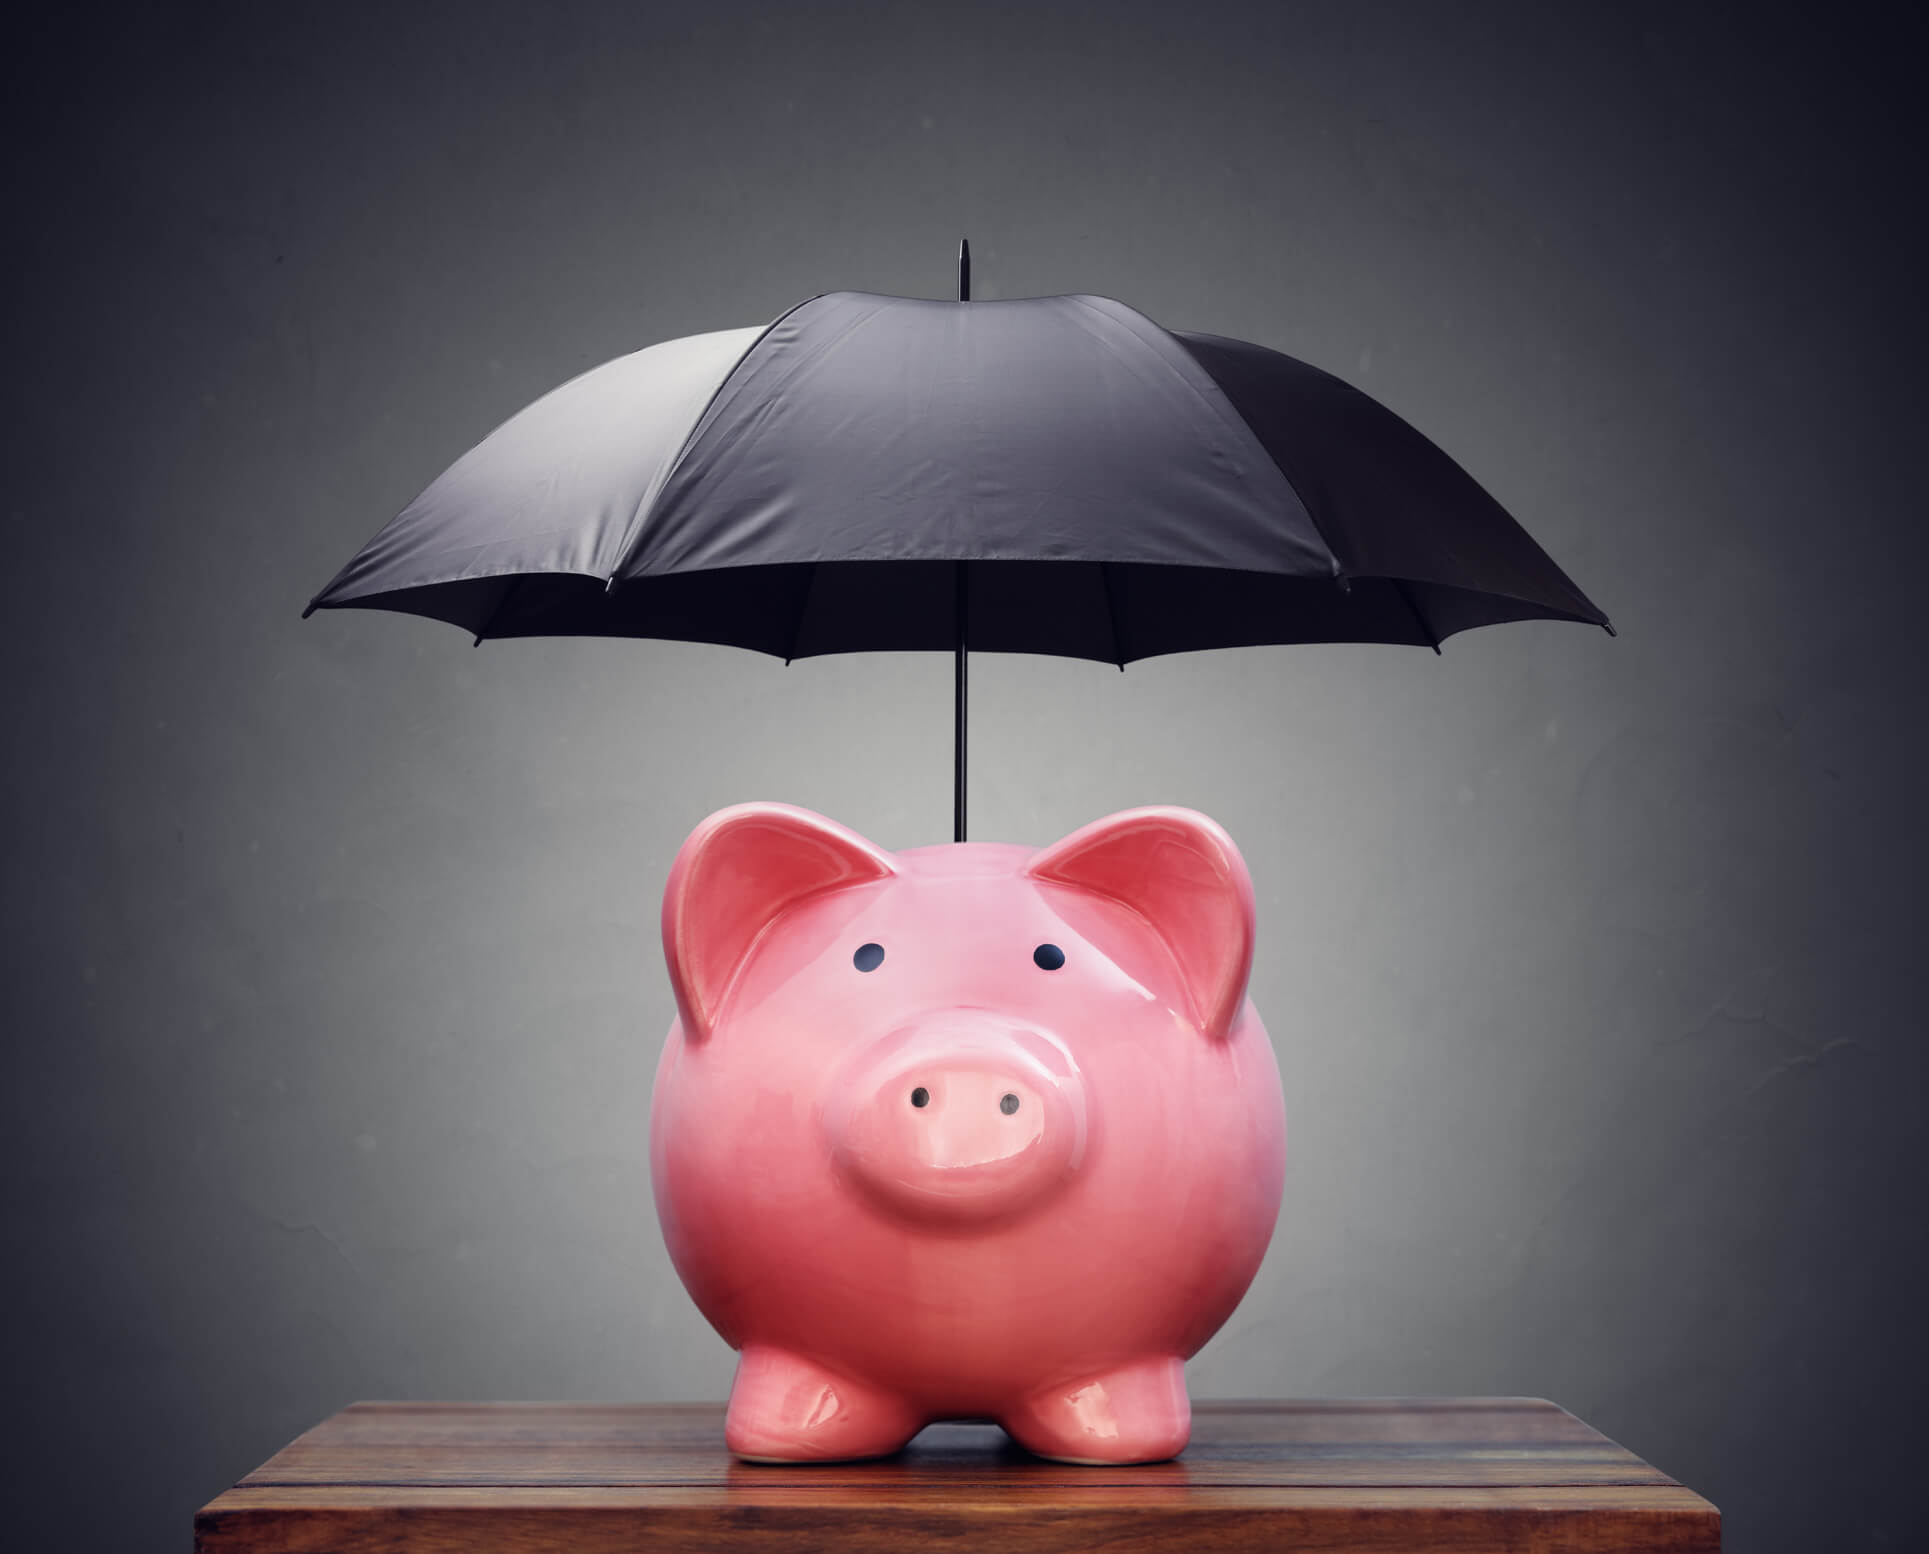 Piggy bank and umbrella concept